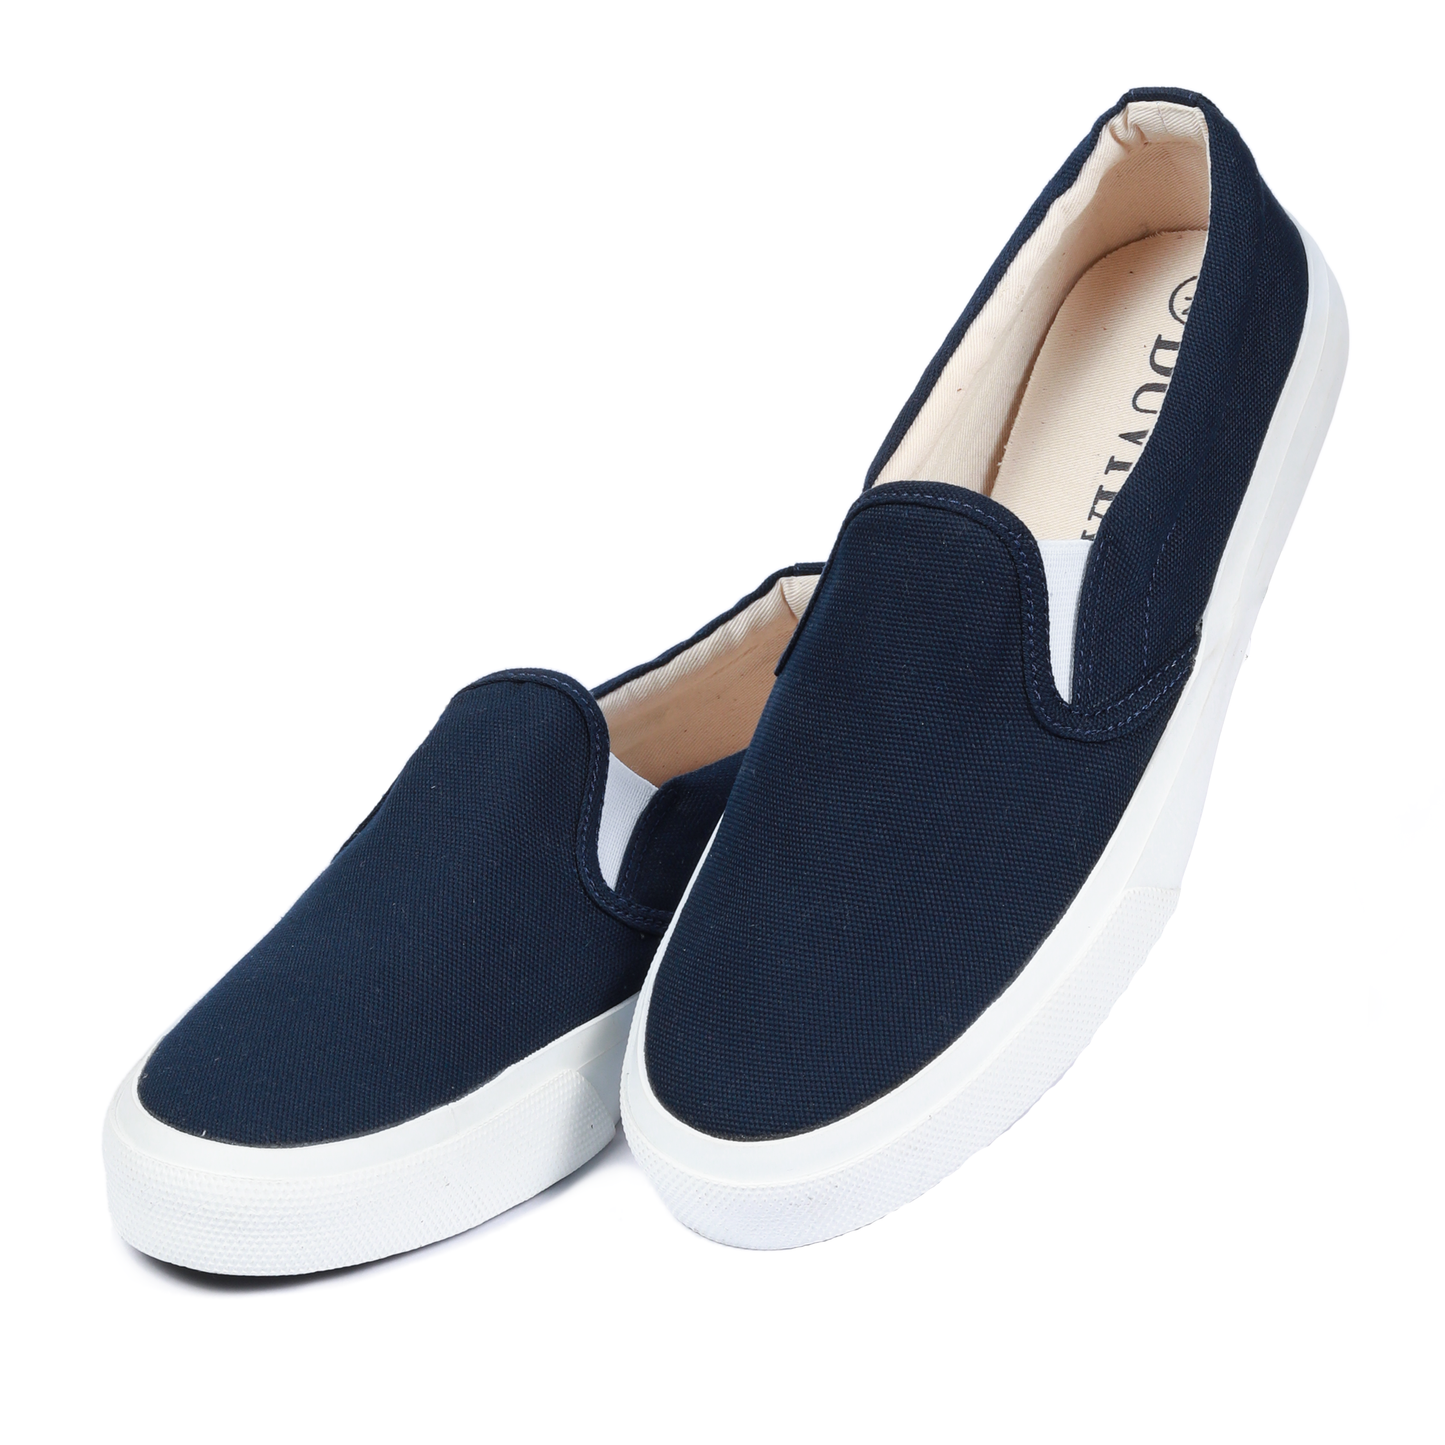 Shop Duvita's Navy Blue Shoes Collection – duvita.co